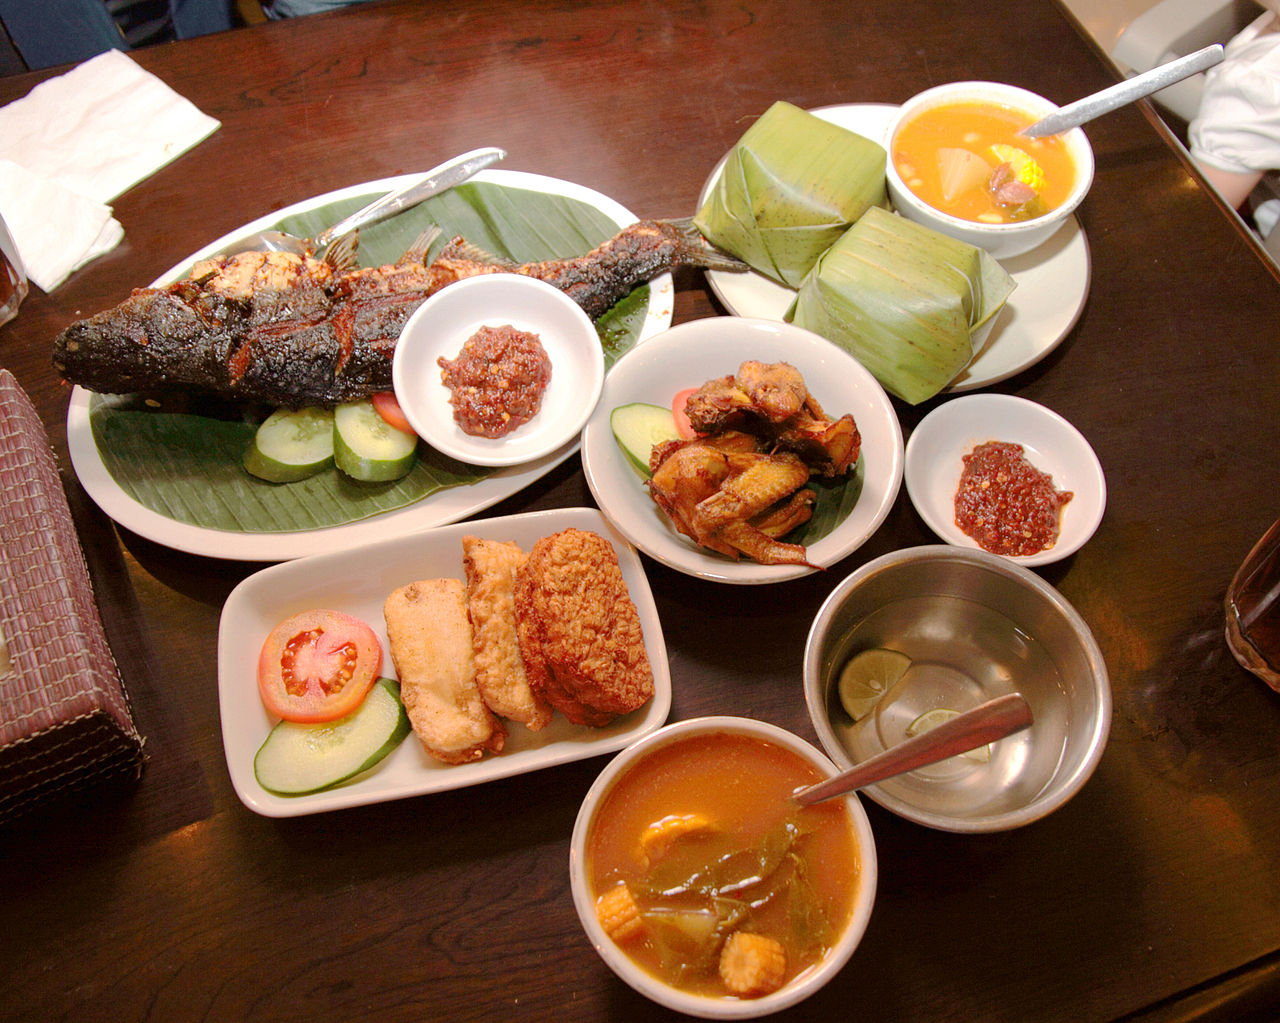 o1280px-Food_Sundanese_Restaurant,_Jakarta.jpg